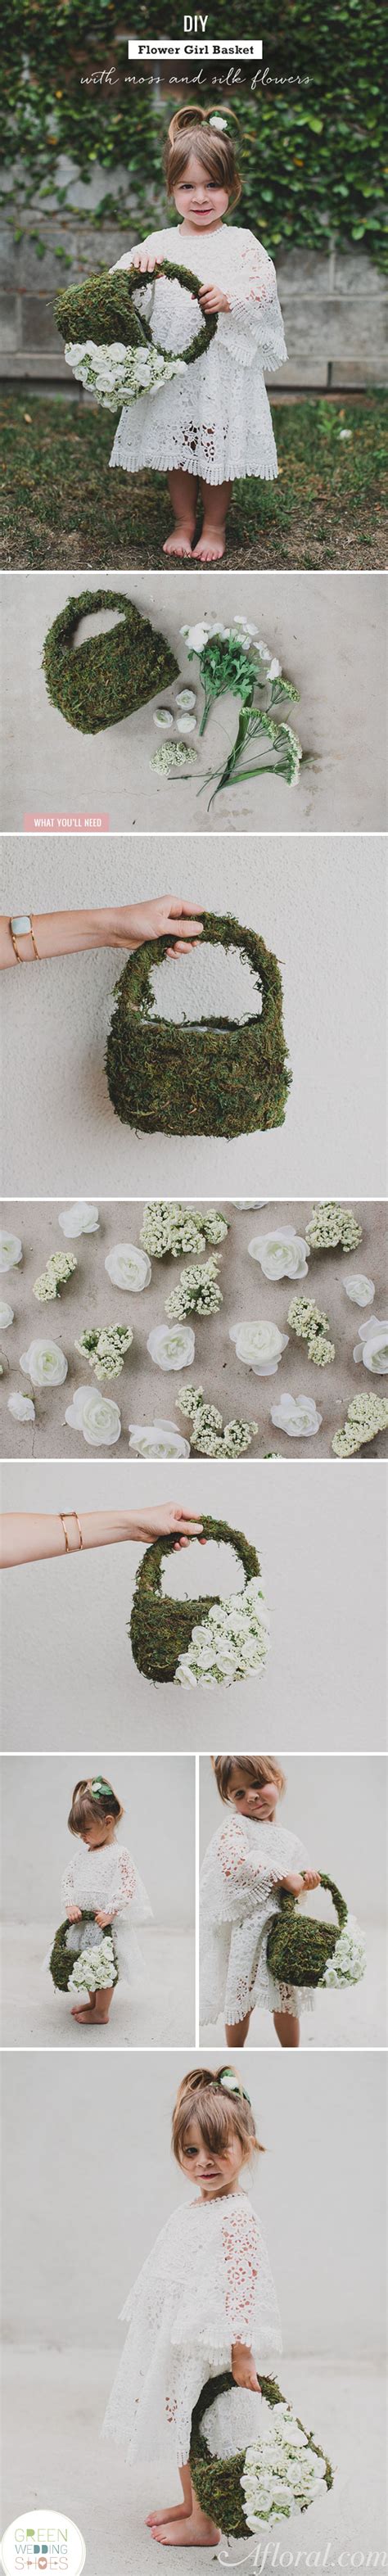 Pin On Wedding Flowers